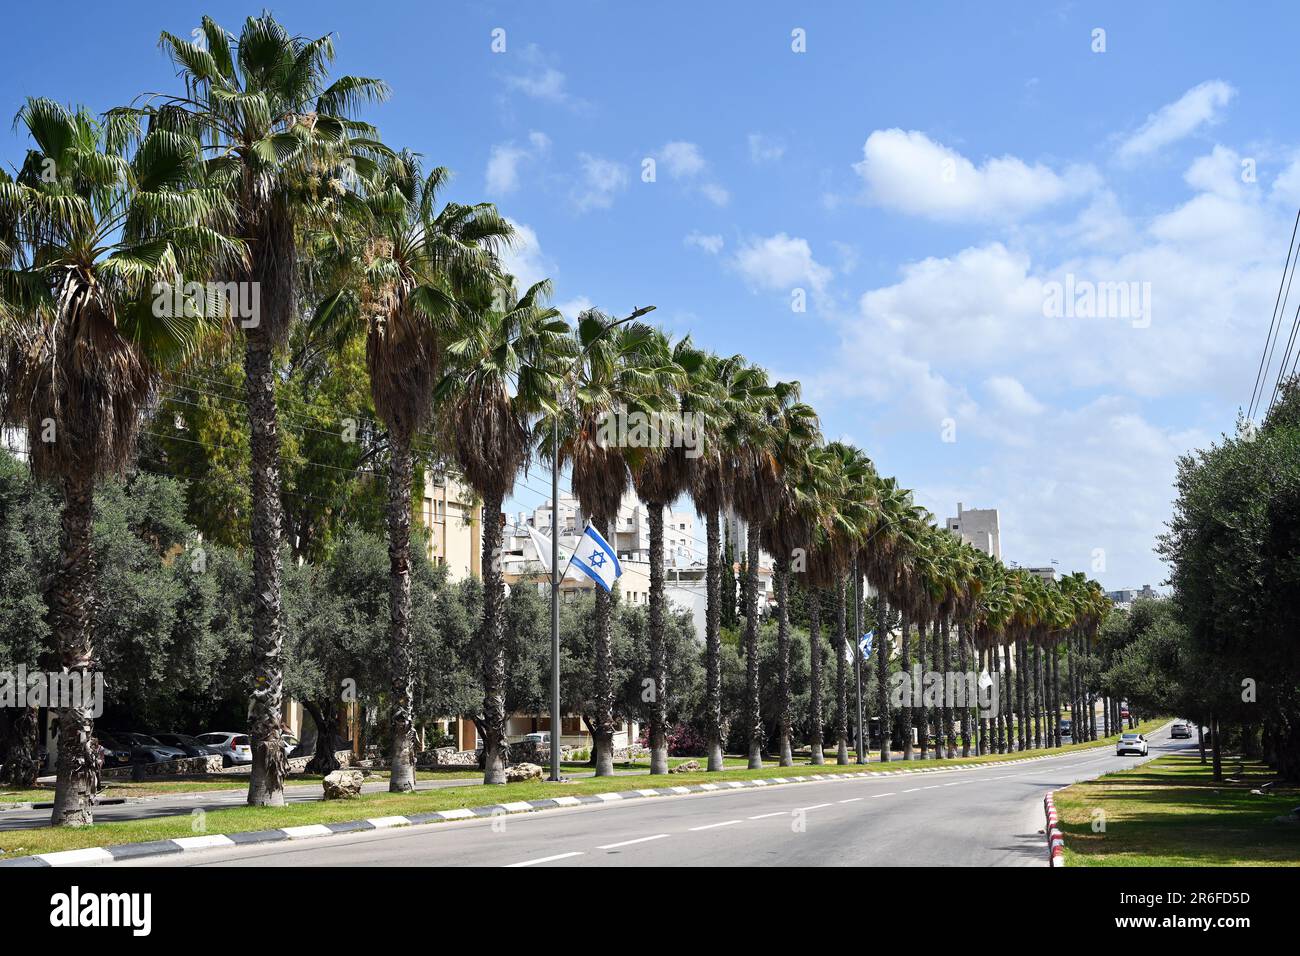 Avenue of palm trees Stock Photo